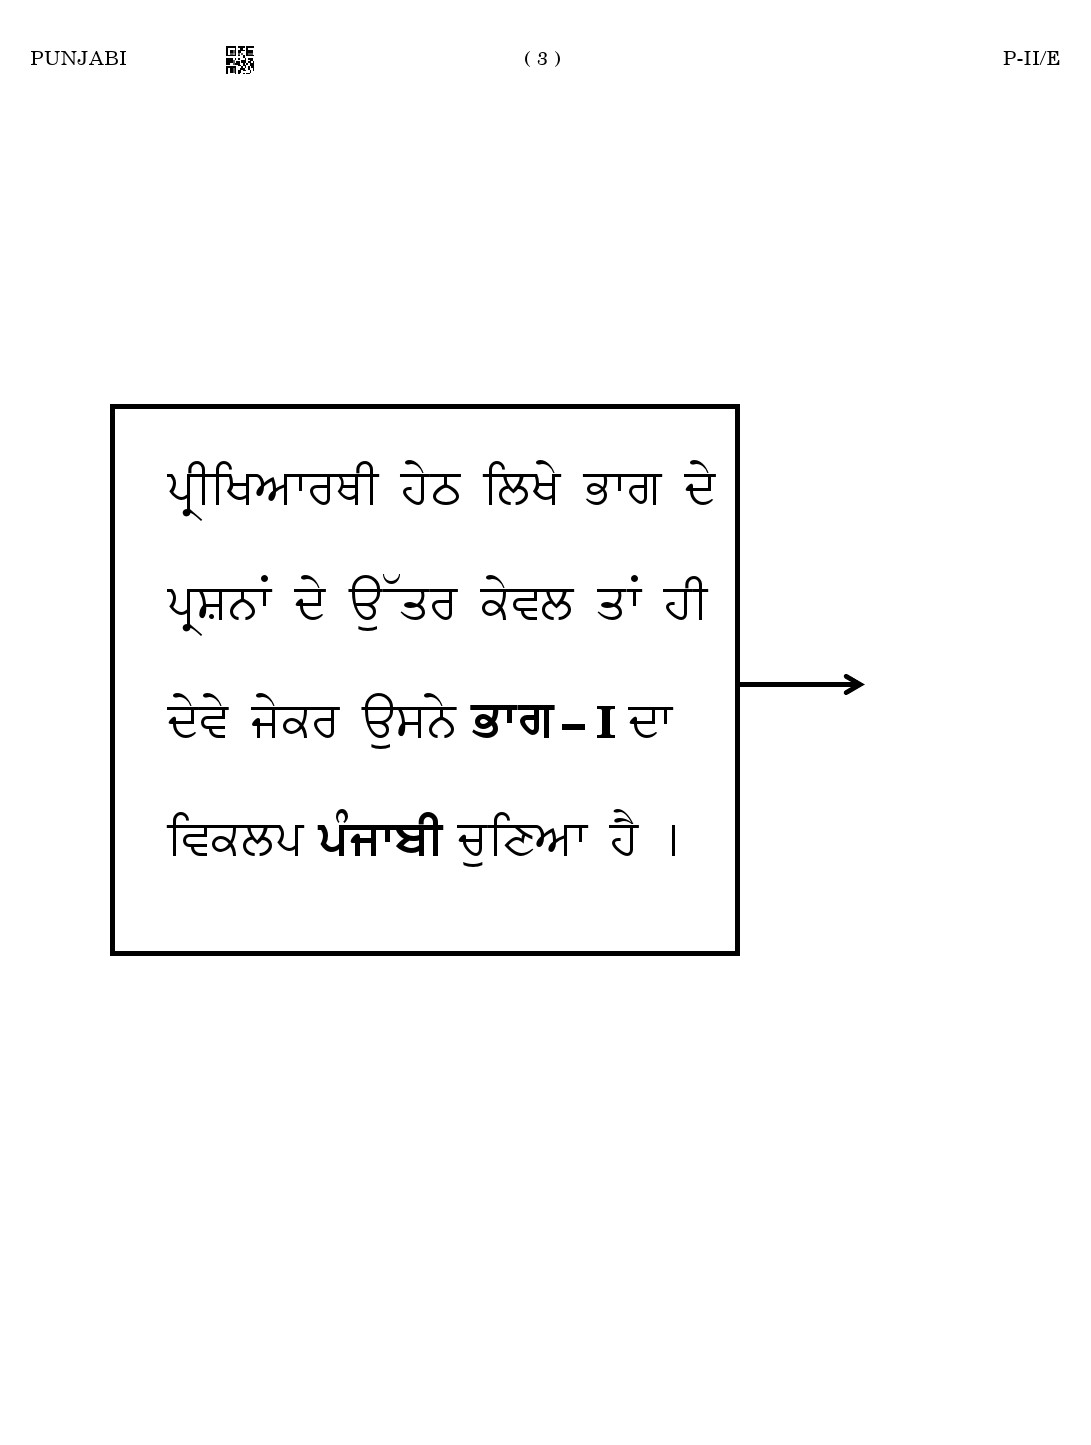 CTET August 2023 Punjabi Language Supplement Paper II Part IV and V 3